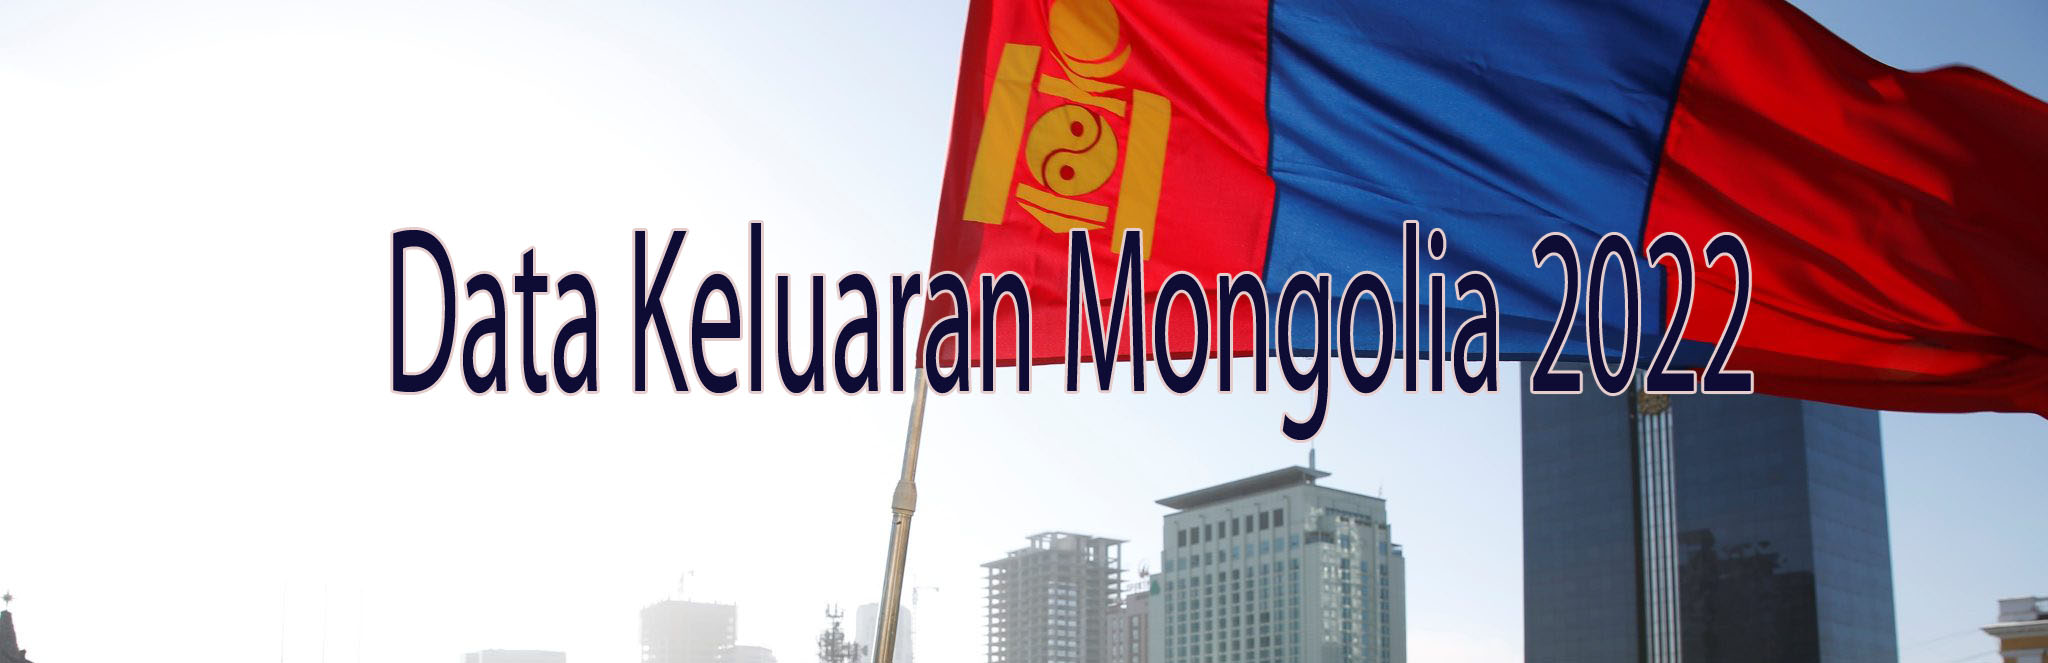 Data Keluaran Mongolia 2022